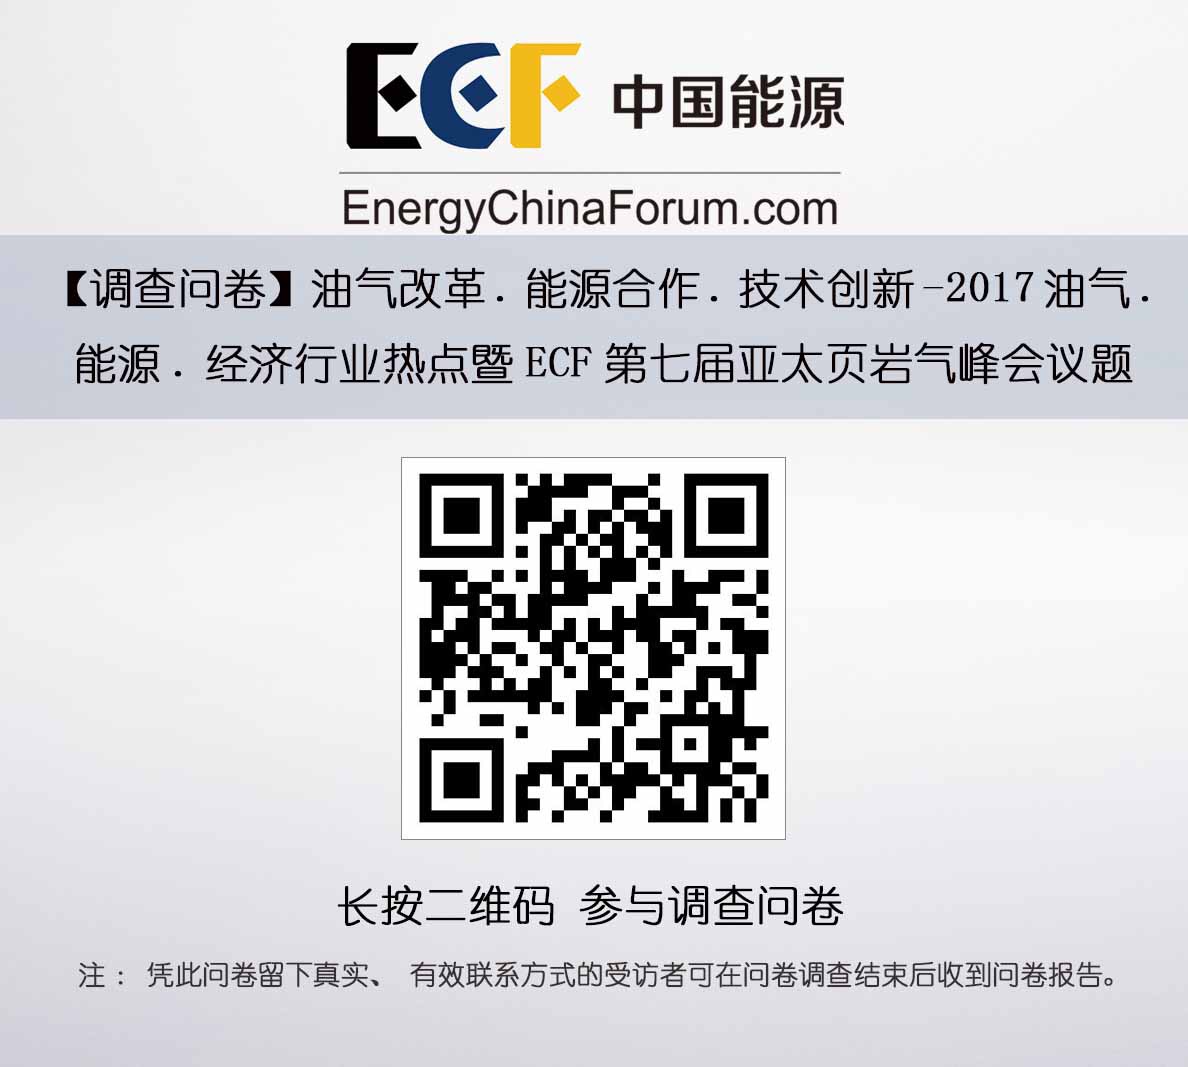 017ECF油气、能源、经济行业热点调查问卷